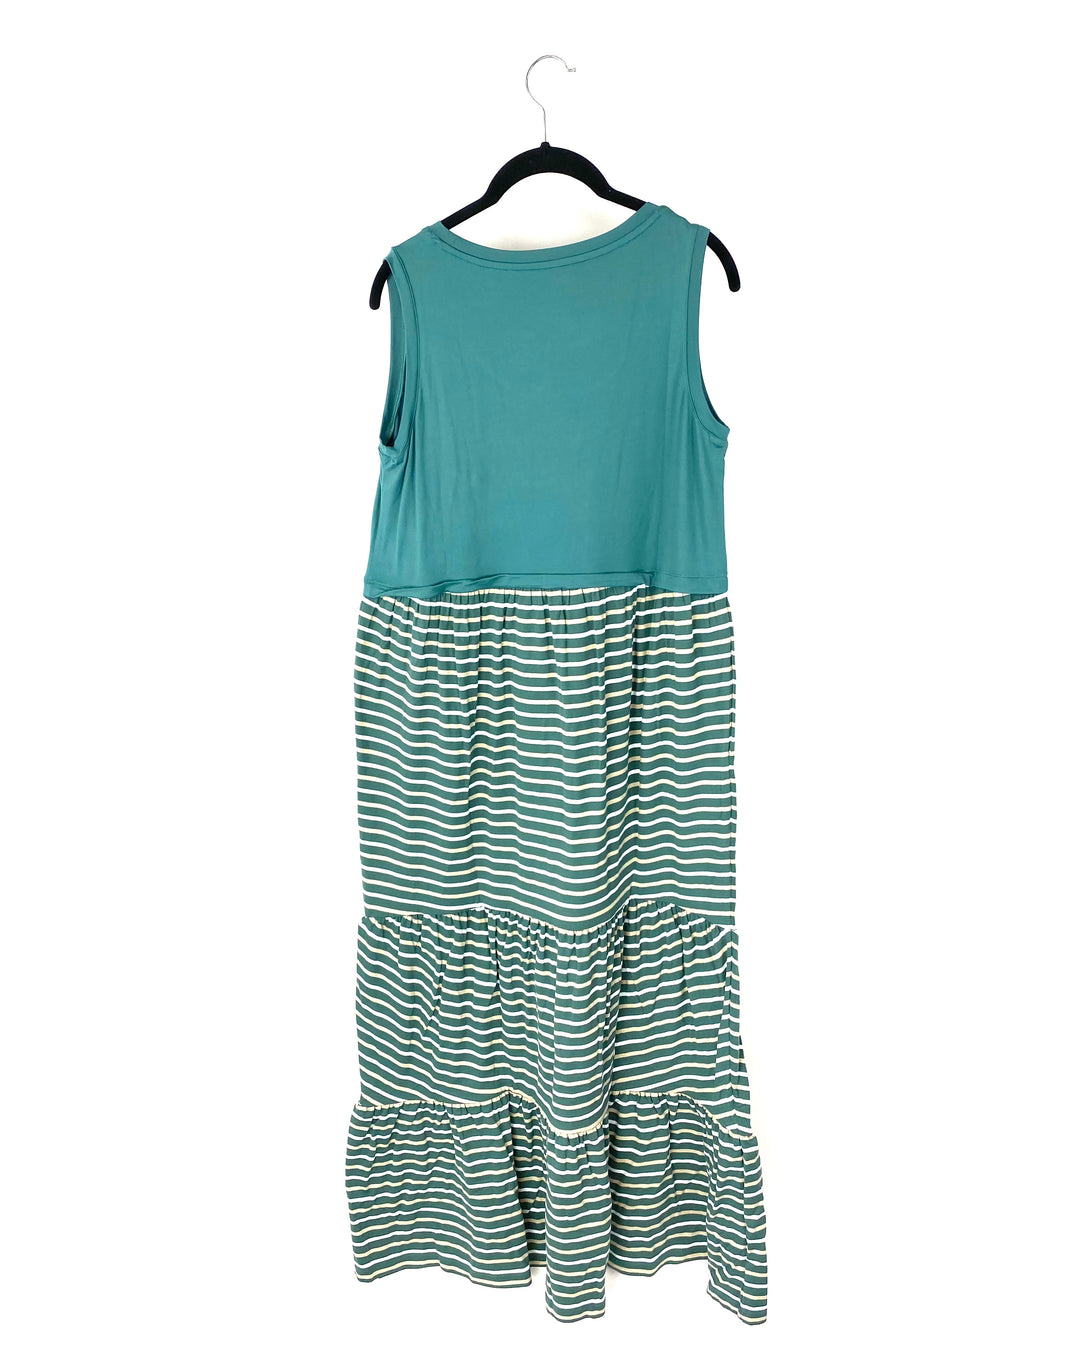 Green Striped Ruffled Dress - Small/Medium